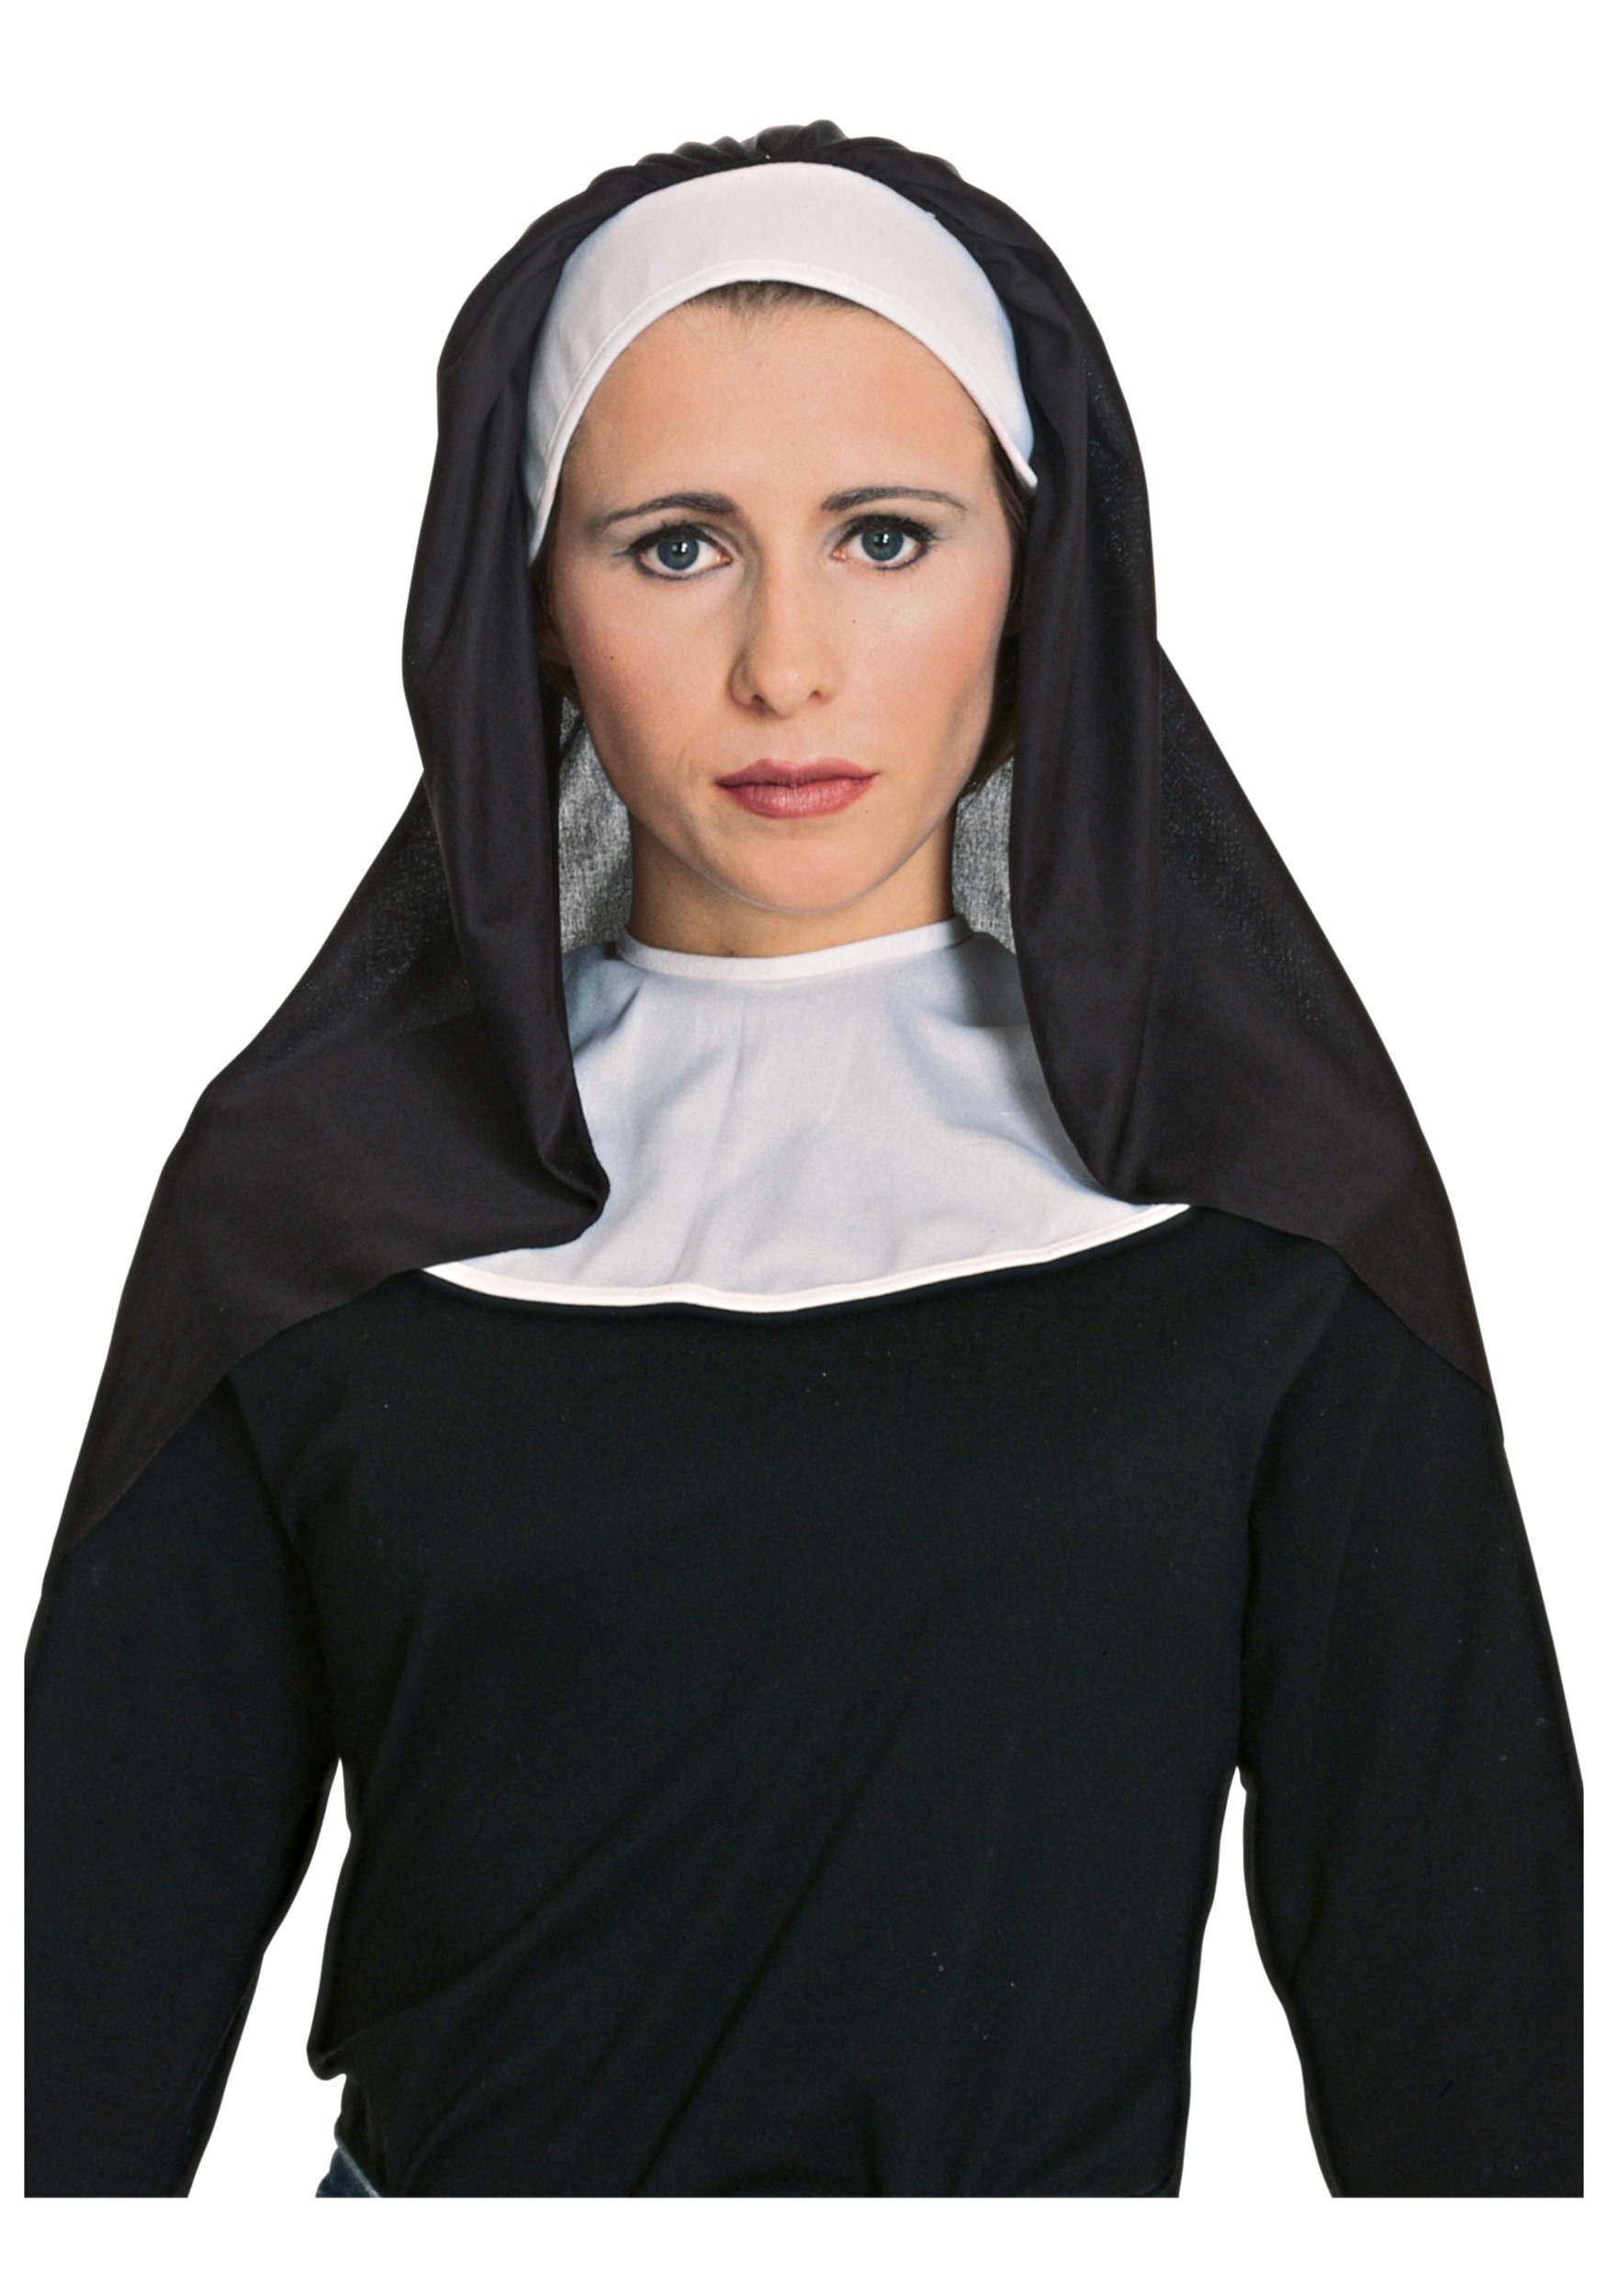 Nun Accessory Costume Kit